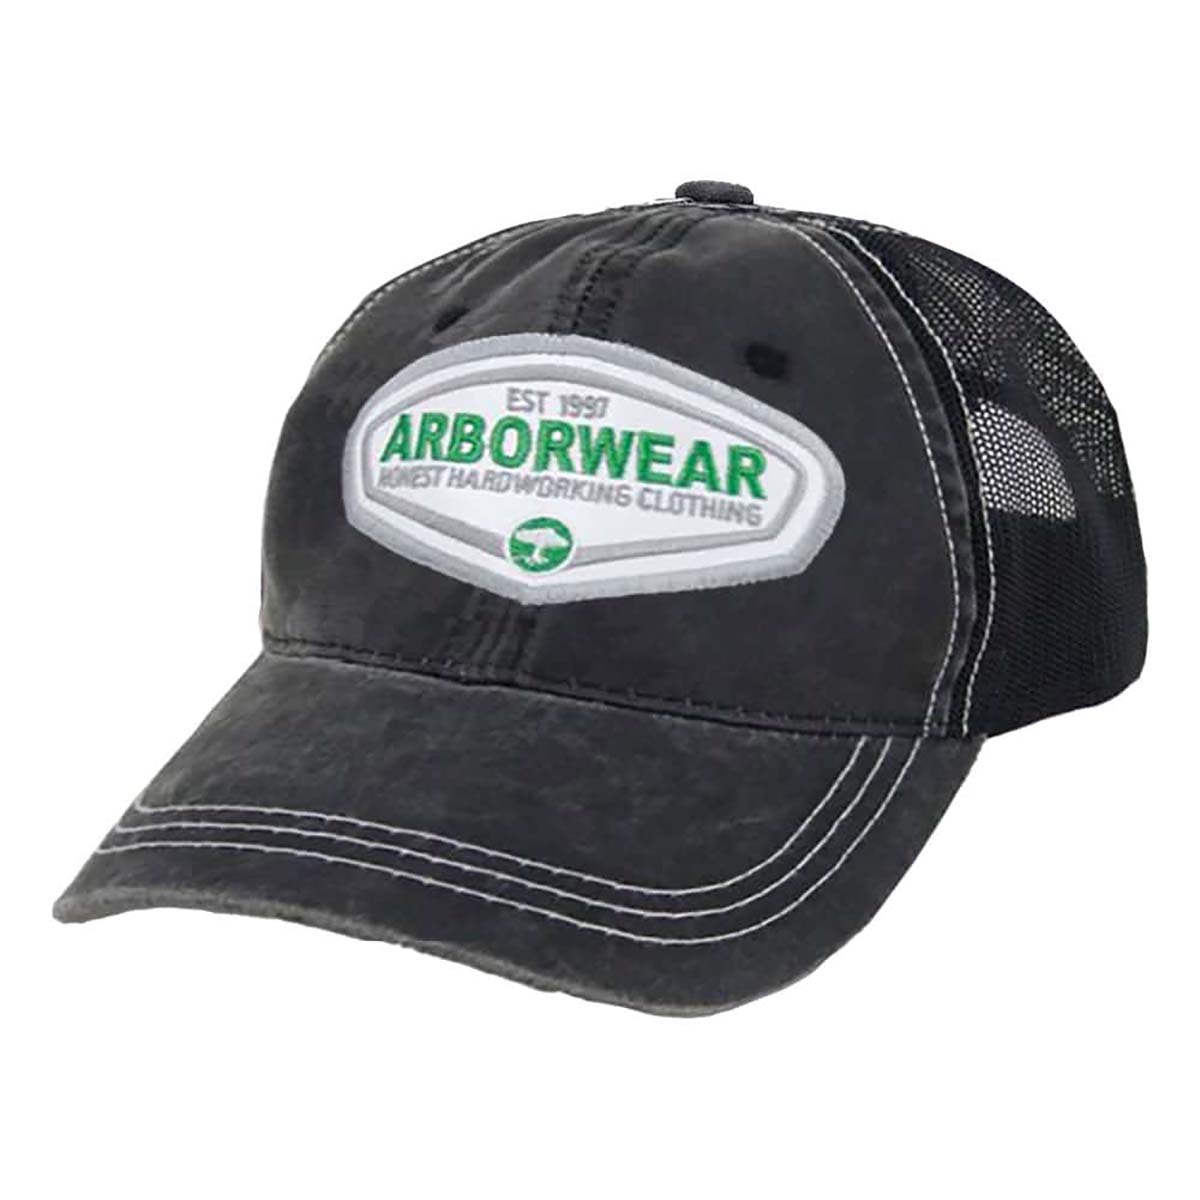 Arborwear 1997 Patch Weathered Mesh Back Ball Cap